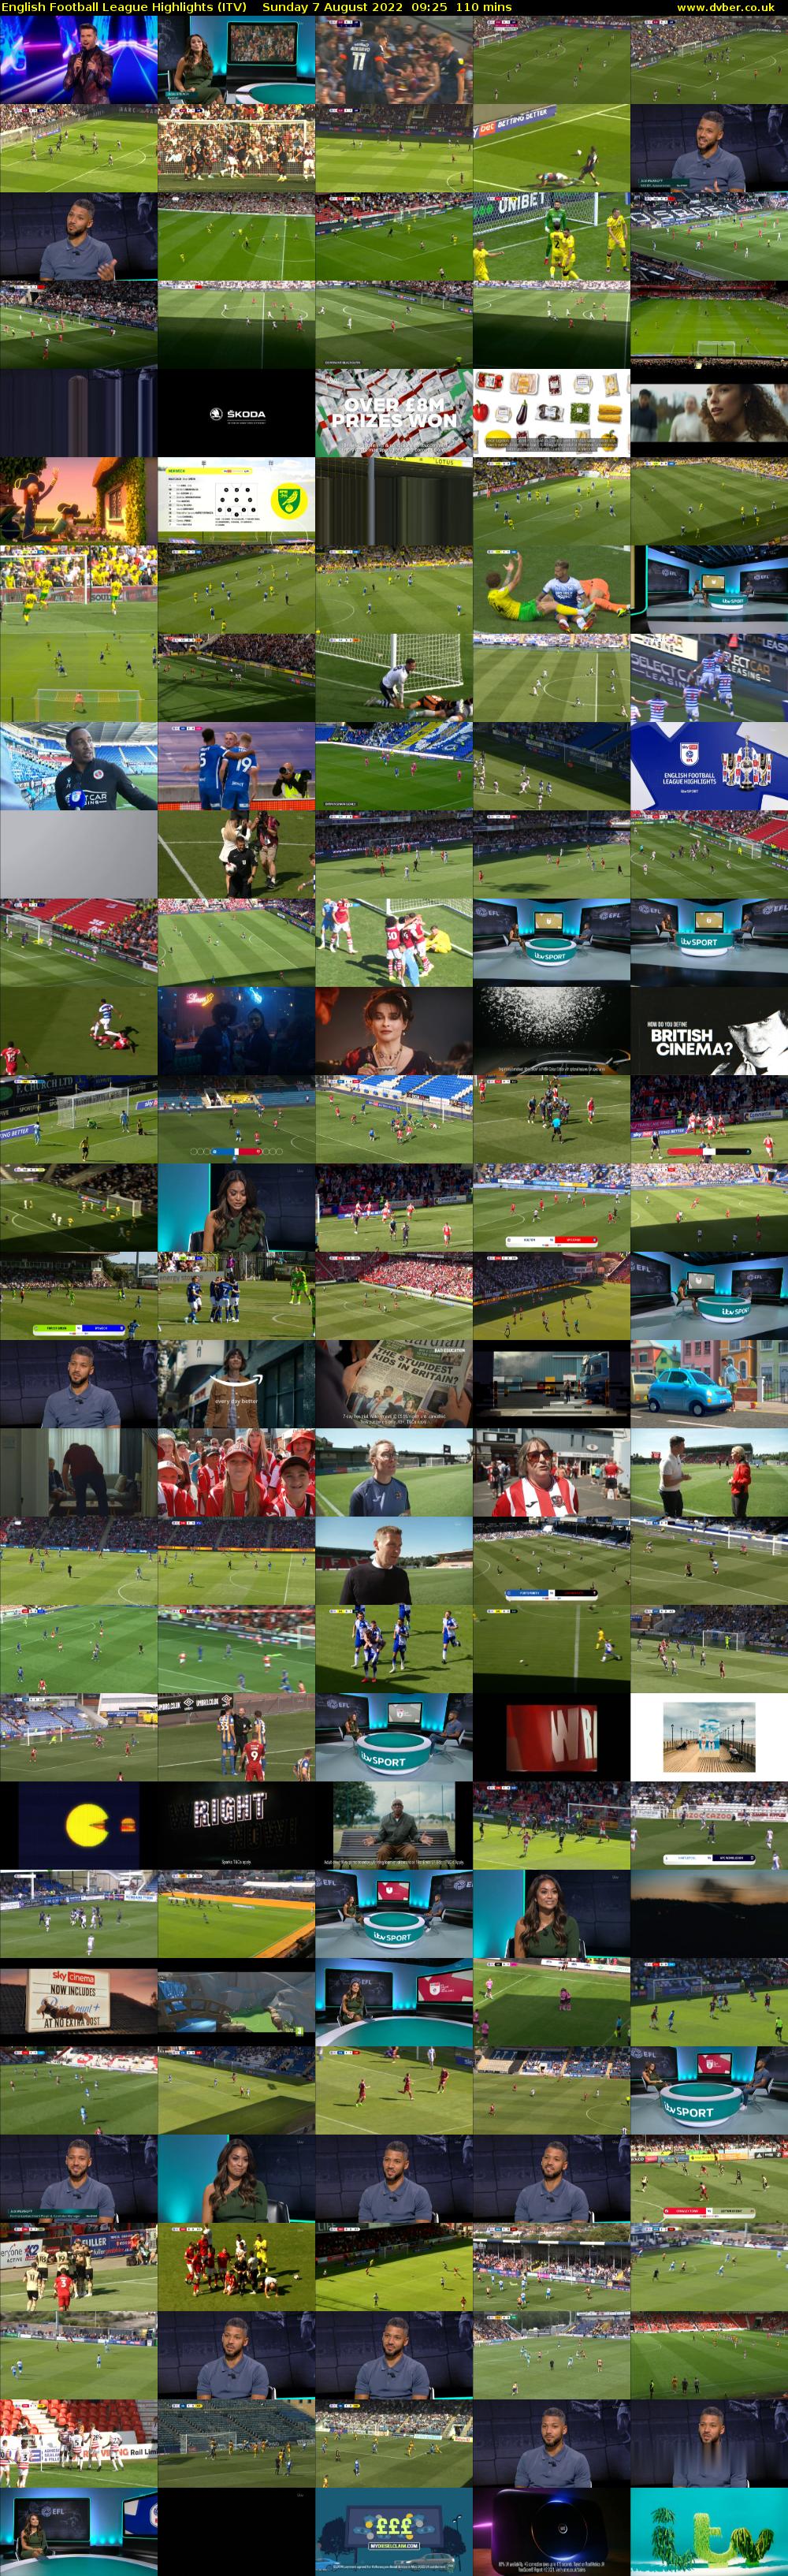 English Football League Highlights (ITV) Sunday 7 August 2022 09:25 - 11:15